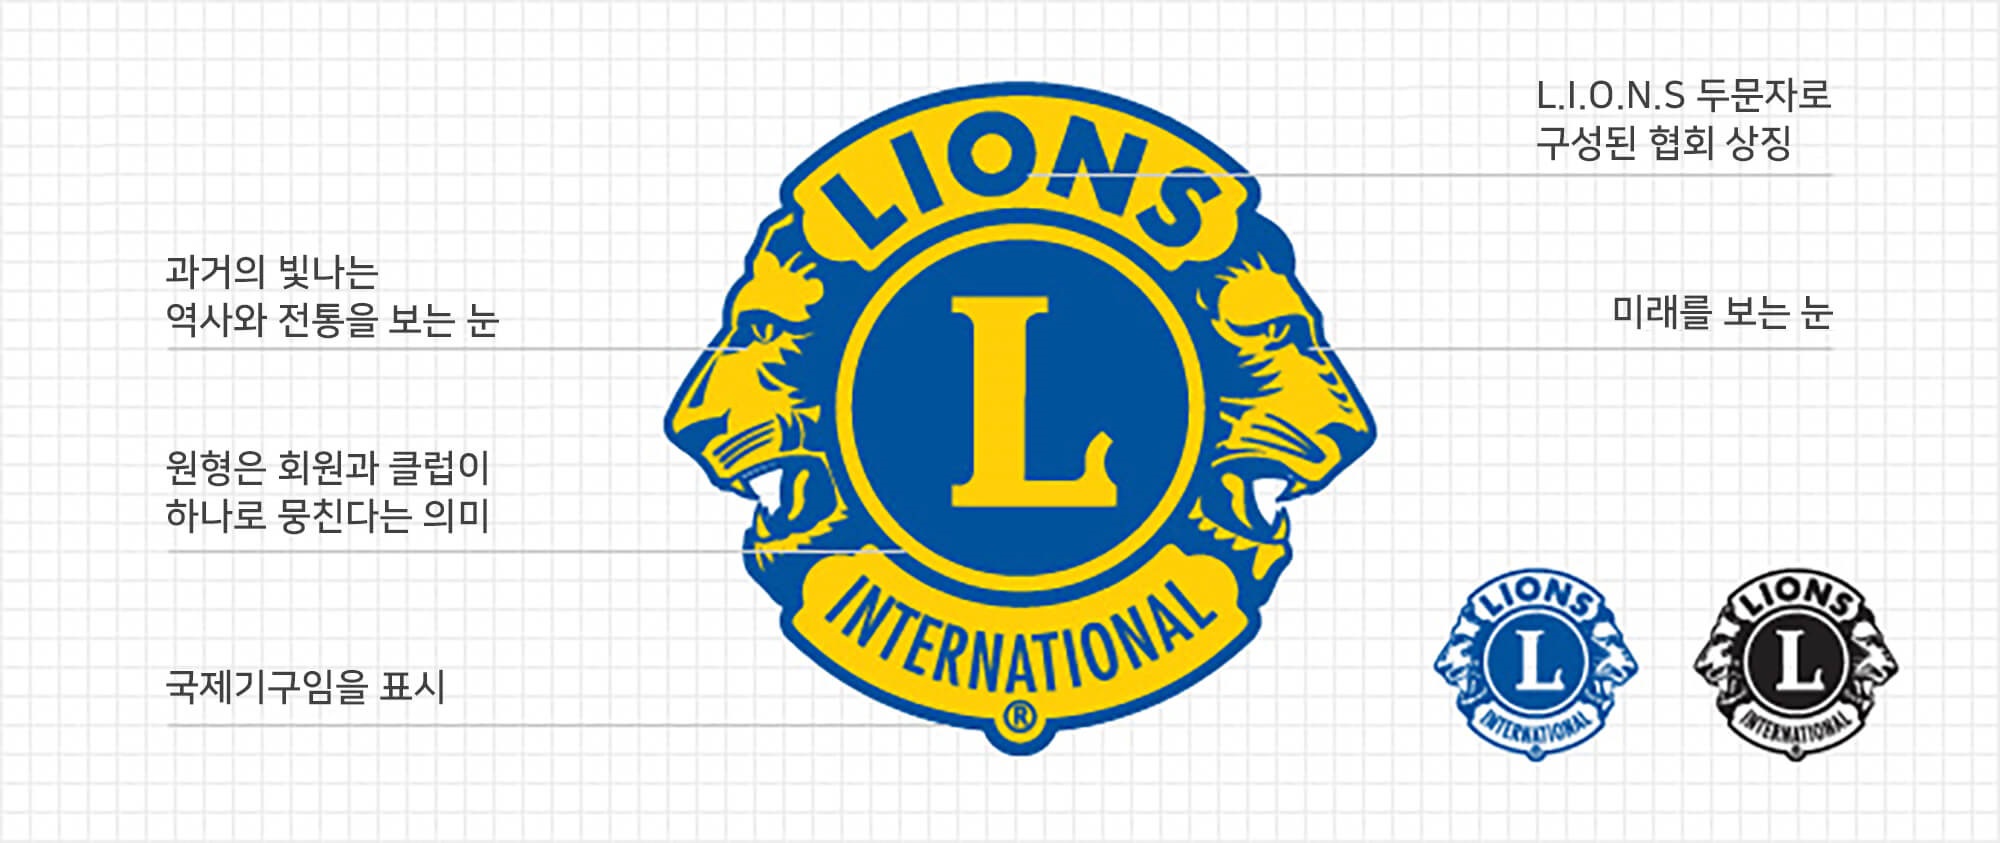 The International Association of Lions Clubs Symbol